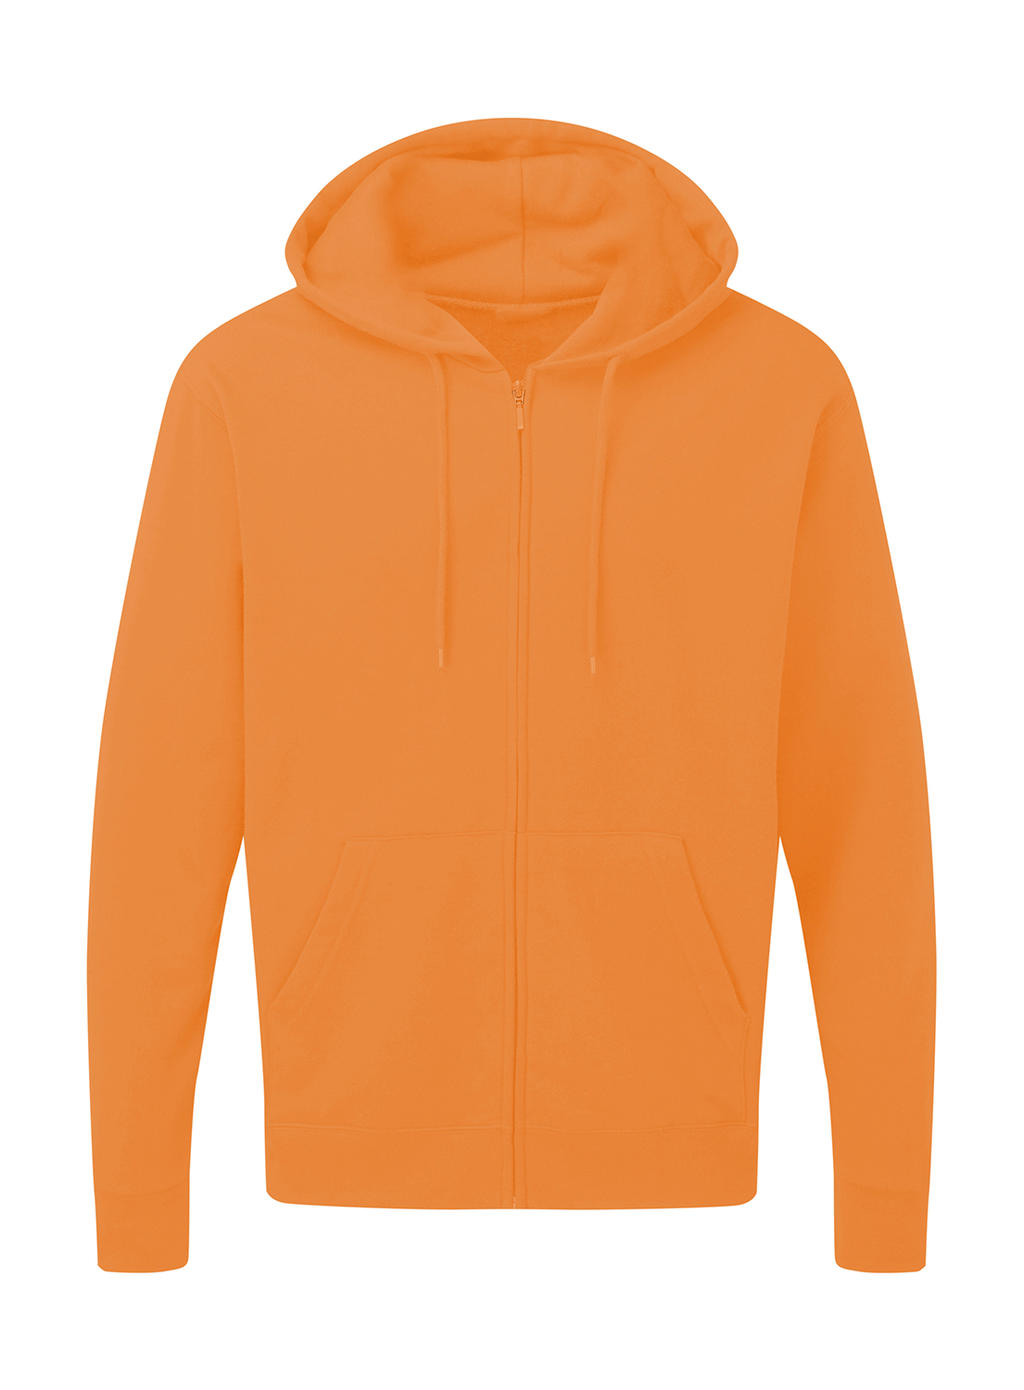  Mens Zip Hood in Farbe Bright Orange